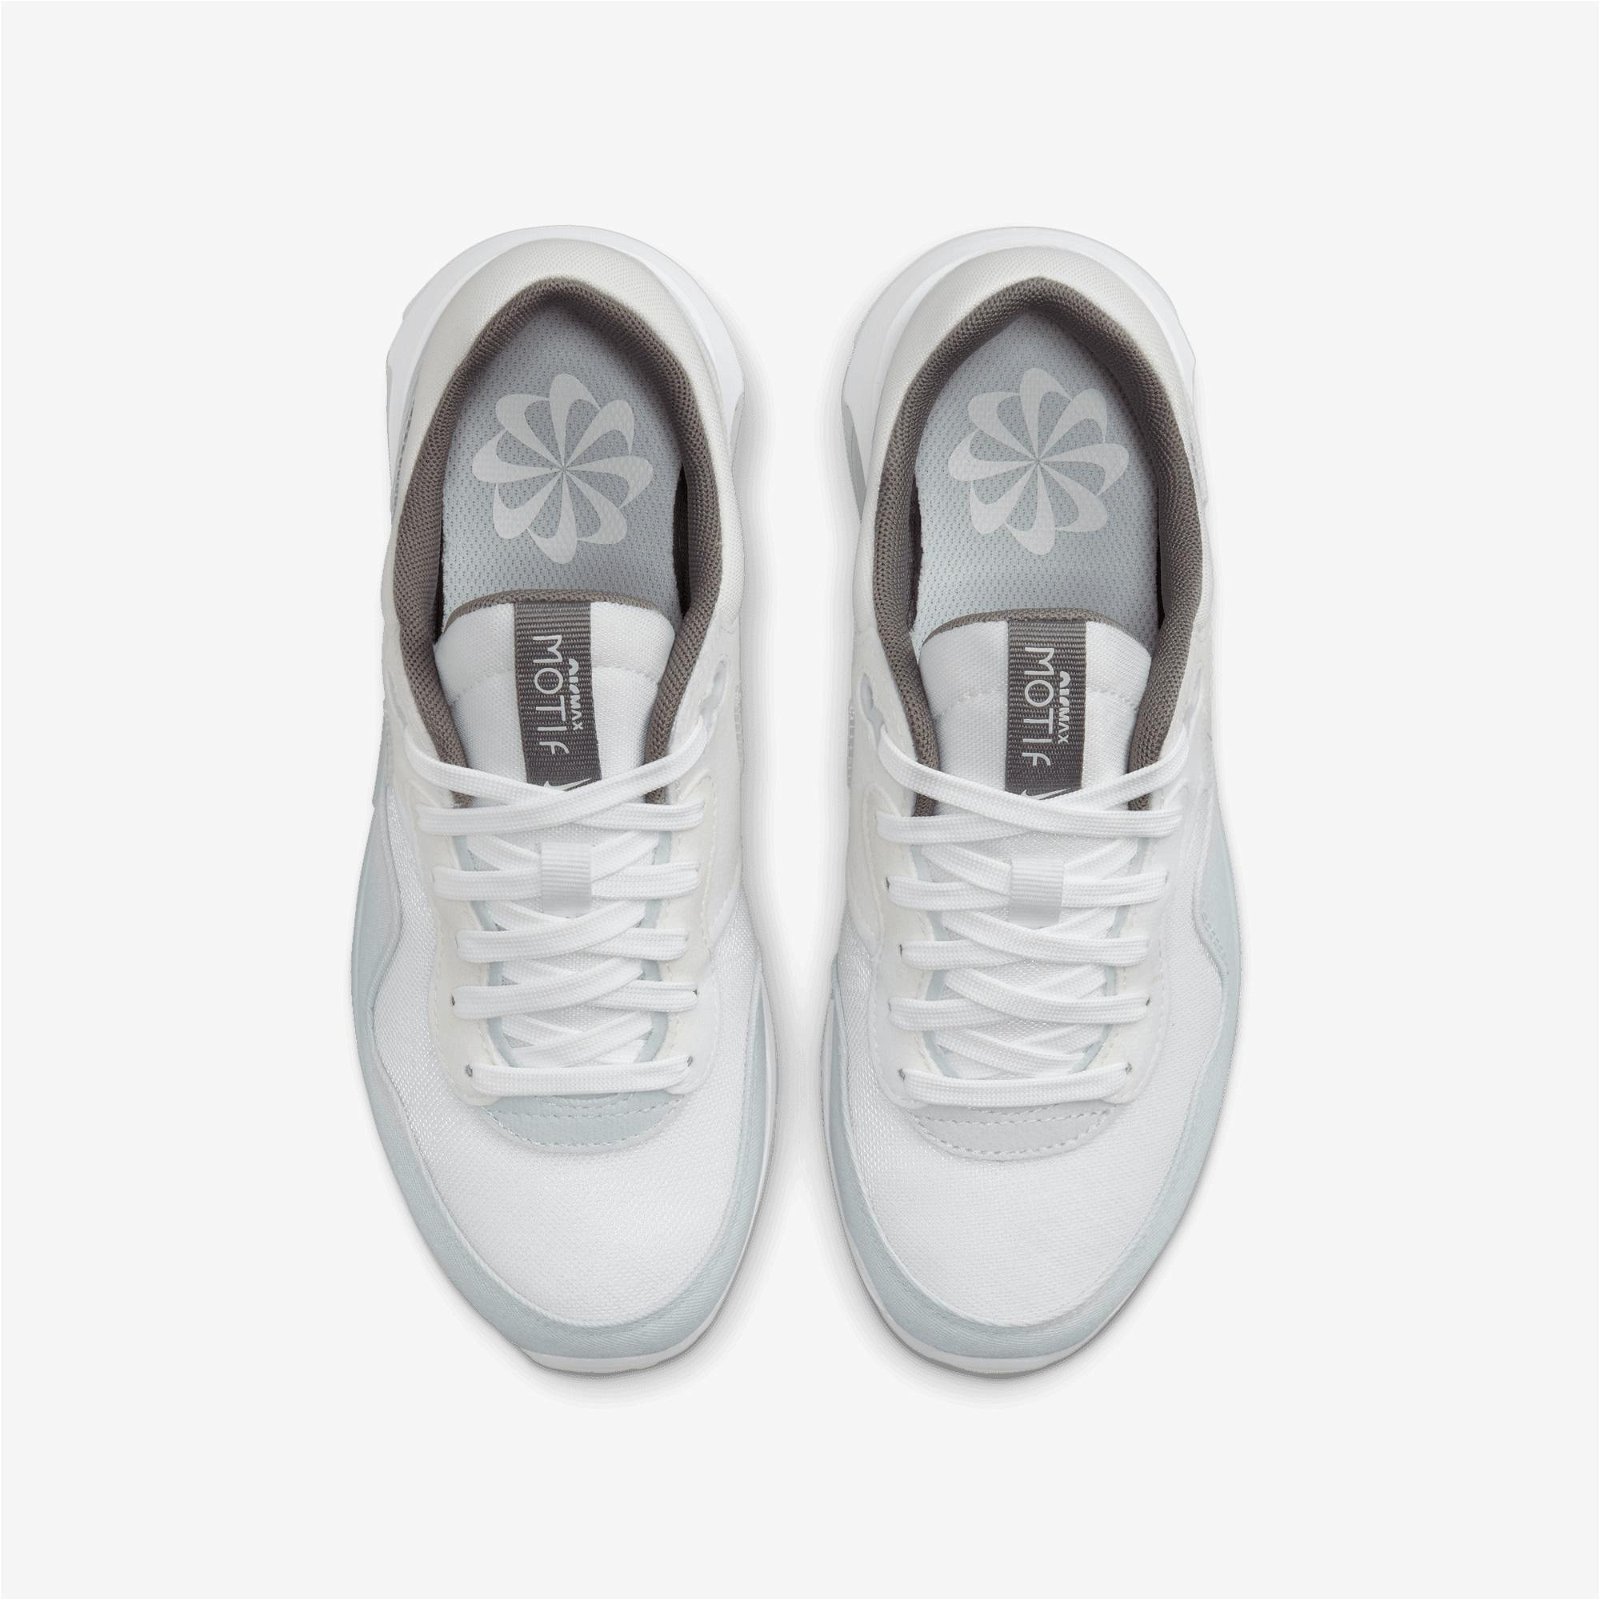 Nike Air Max Motif Beyaz-Mavi Spor Ayakkabı